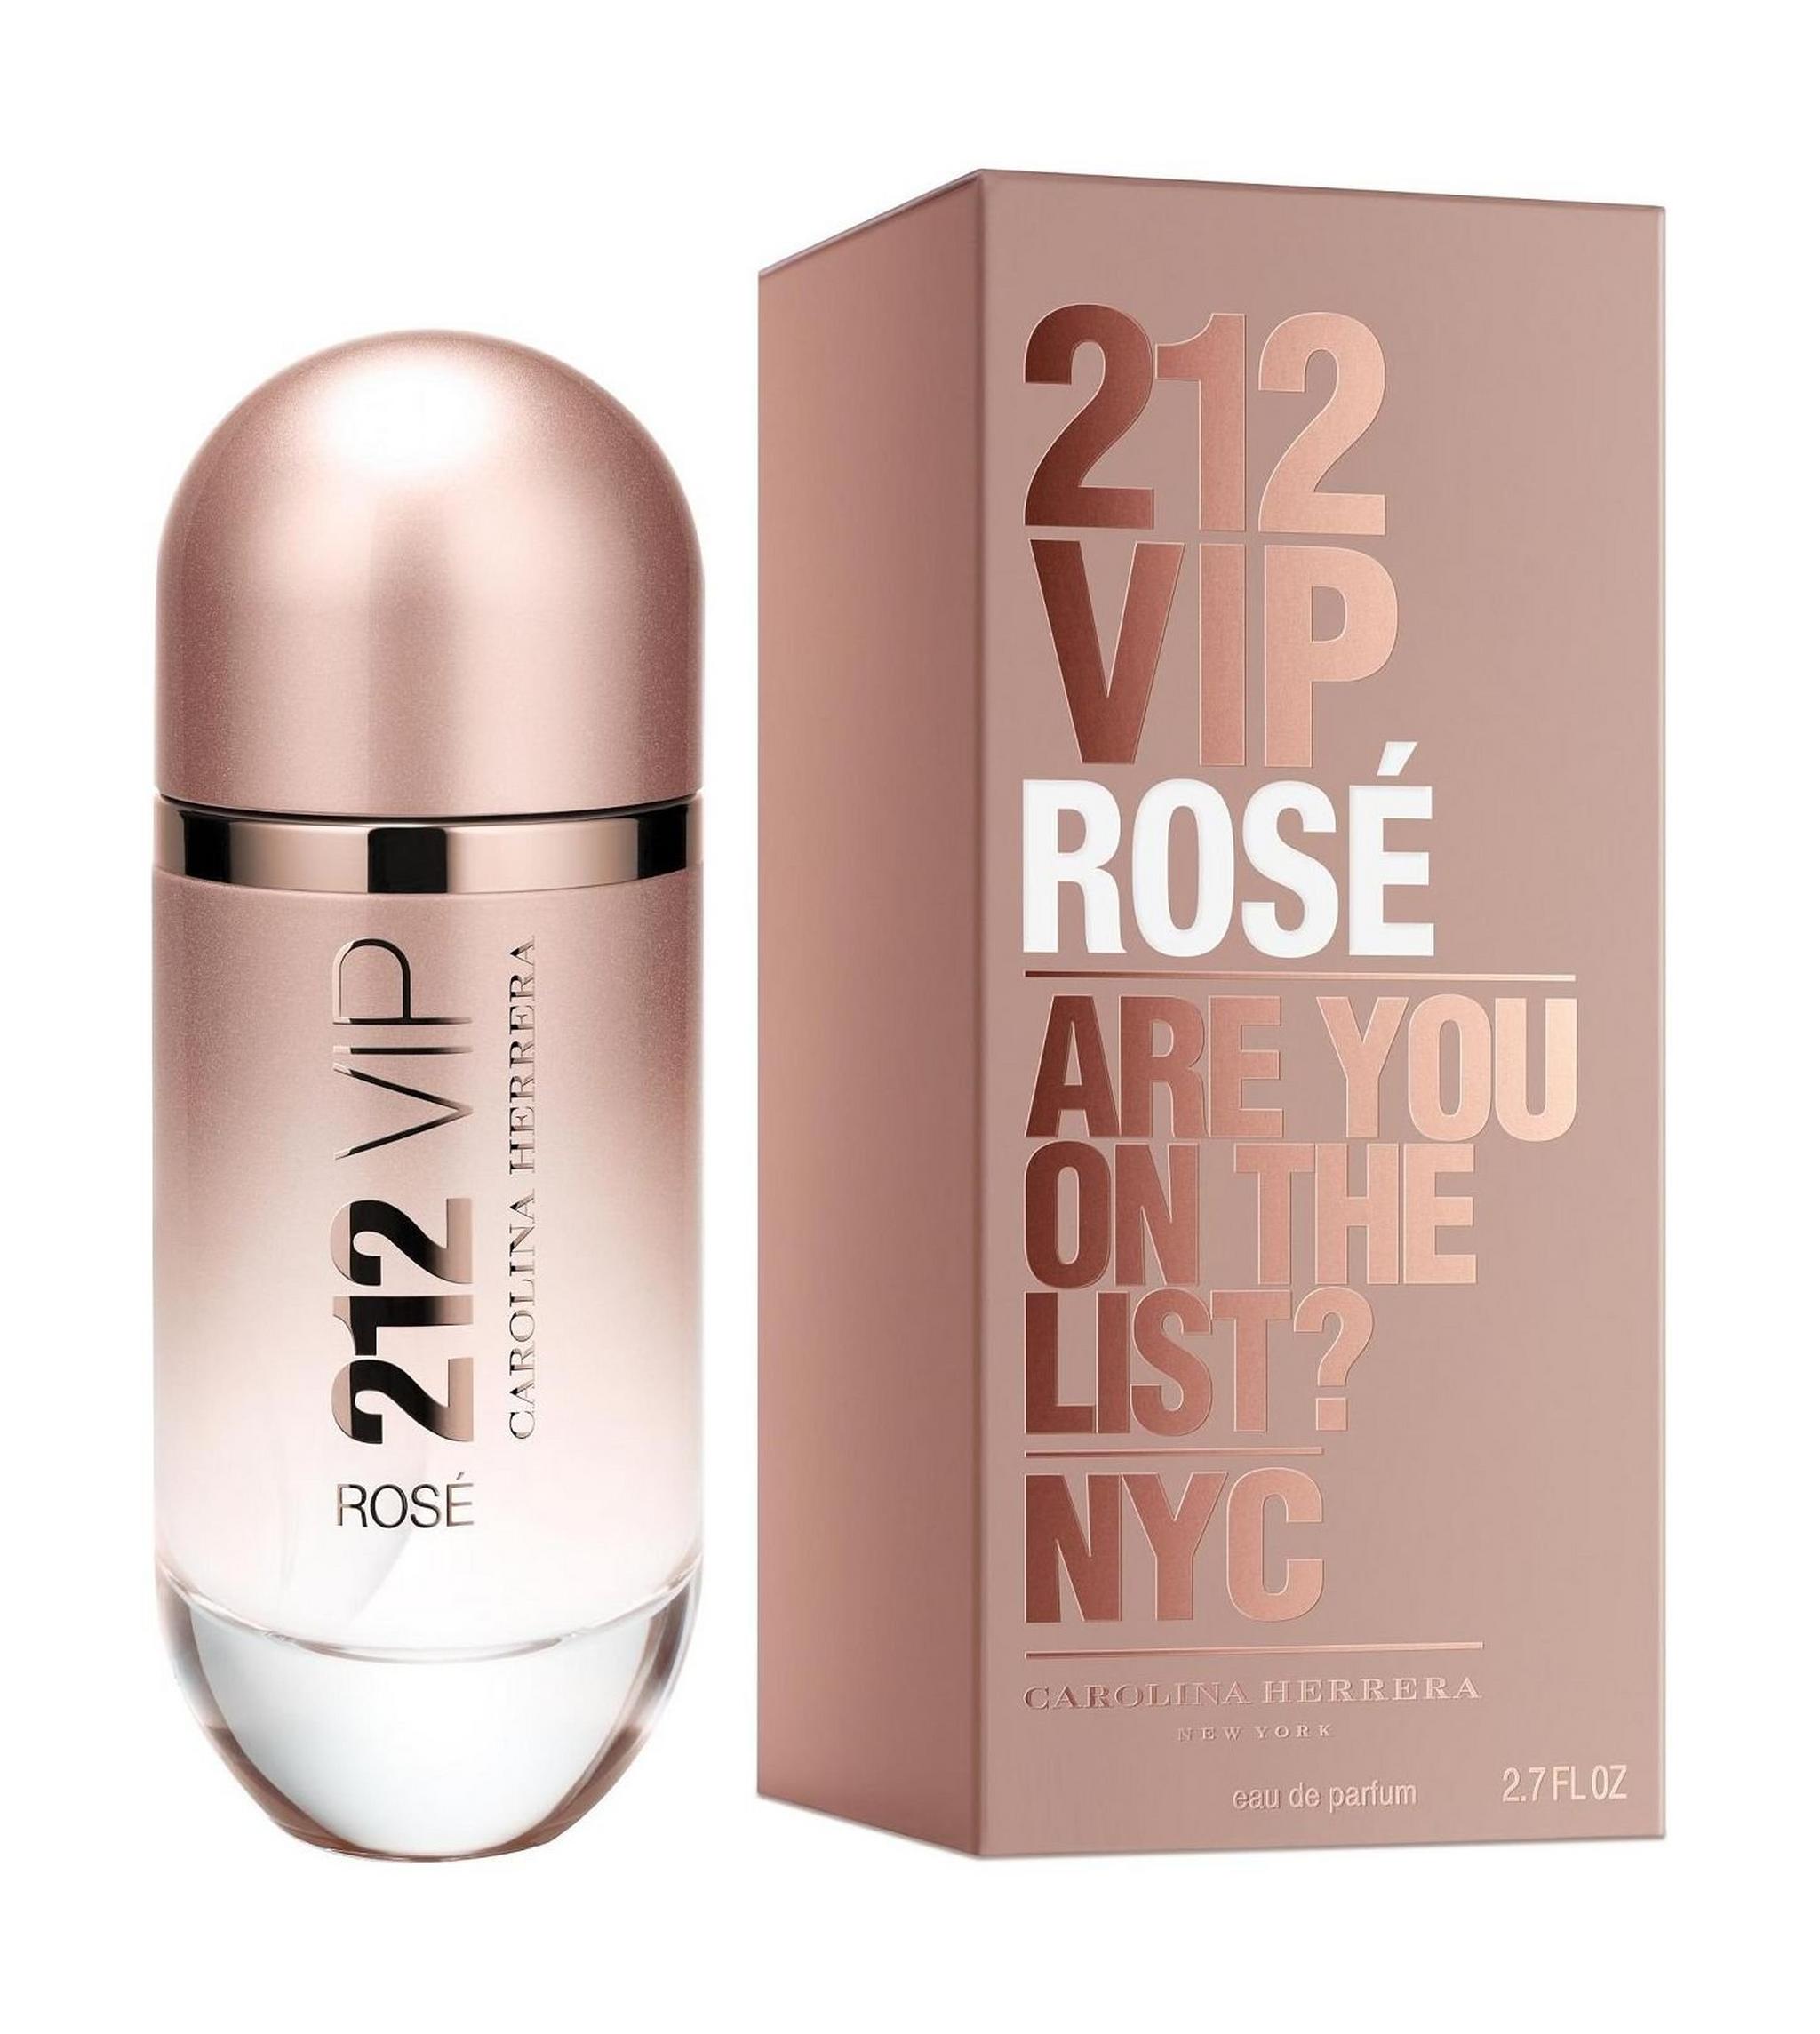 212 Vip Rose by Carolina Herrera for Women 80ml - Eau de Parfum